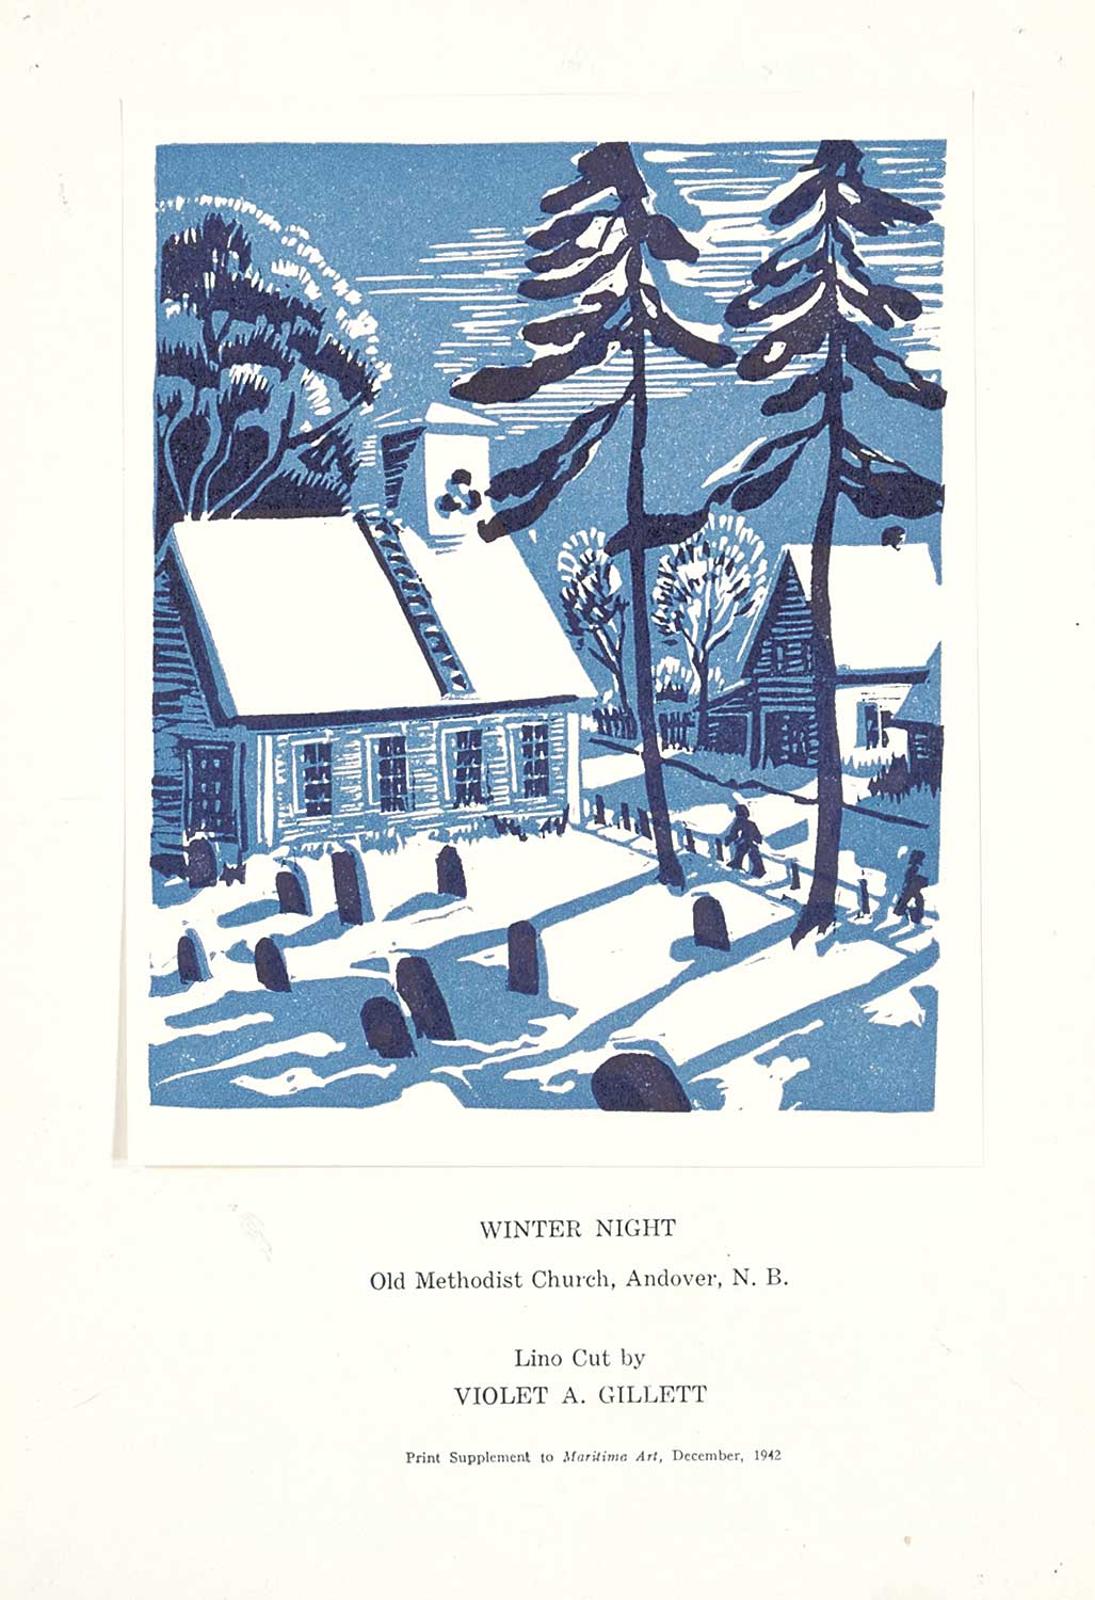 Violet Amy Gillett - Winter Night, Old Methodist Church, Andover, N.B.